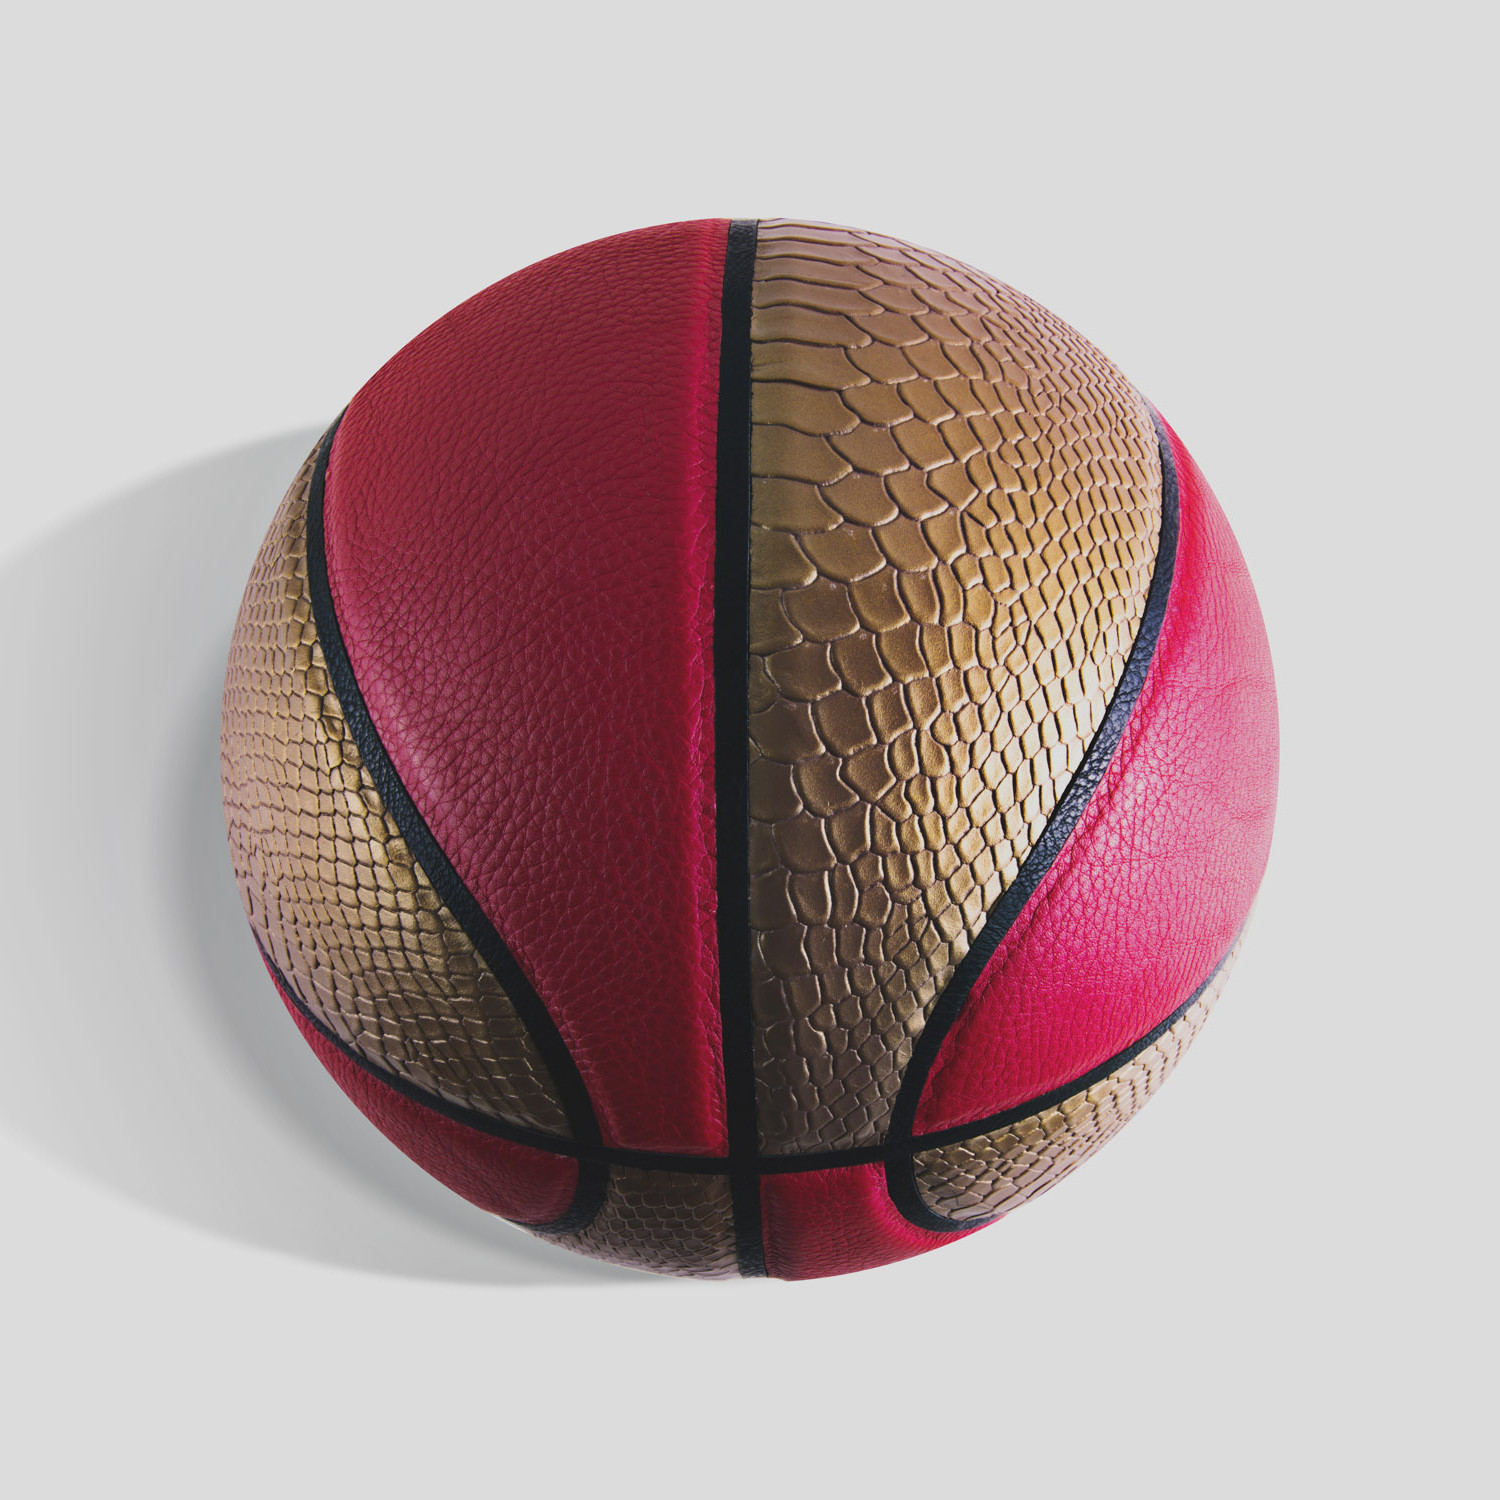 Unofish Basketballs